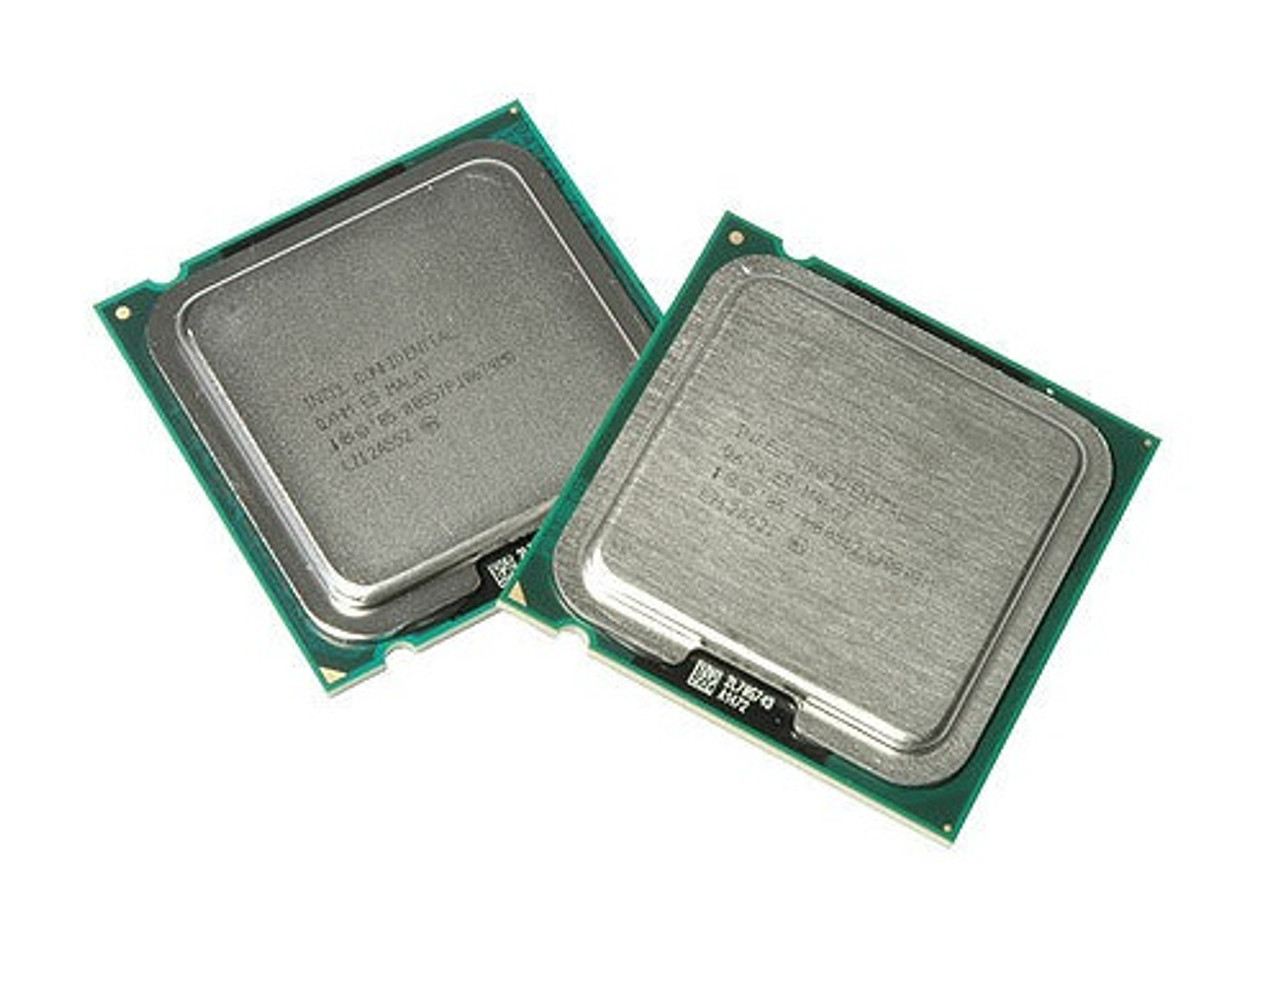 RNND8 - Dell 2.30GHz 1800MHz FSB 1.5MB L2 Cache micro-PGA AMD Phenom II Triple-Core Mobile N870 Processor